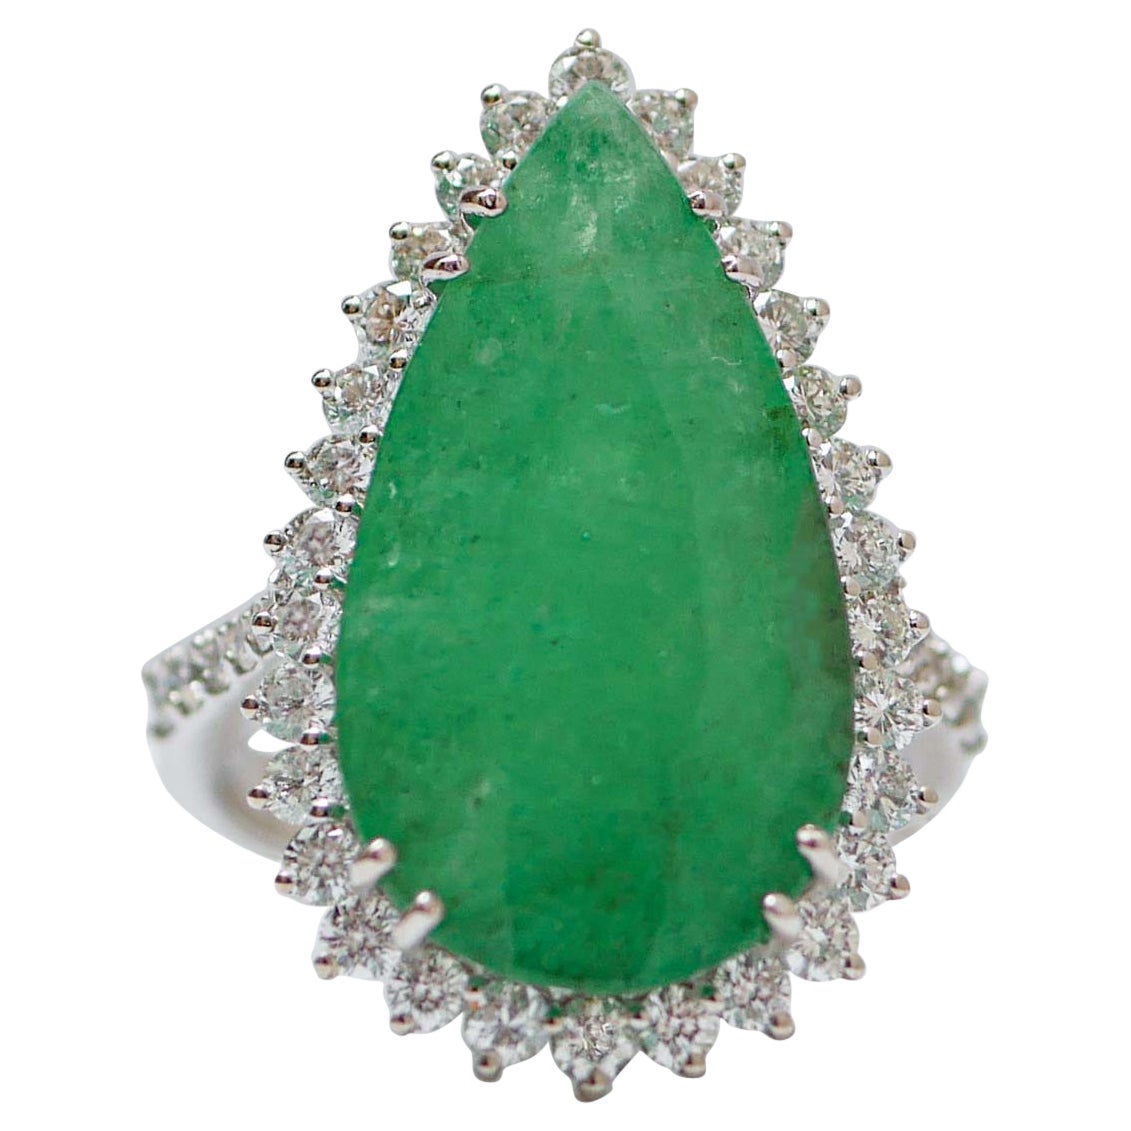 Emerald, Diamonds, 18 Karat White Gold Ring. For Sale